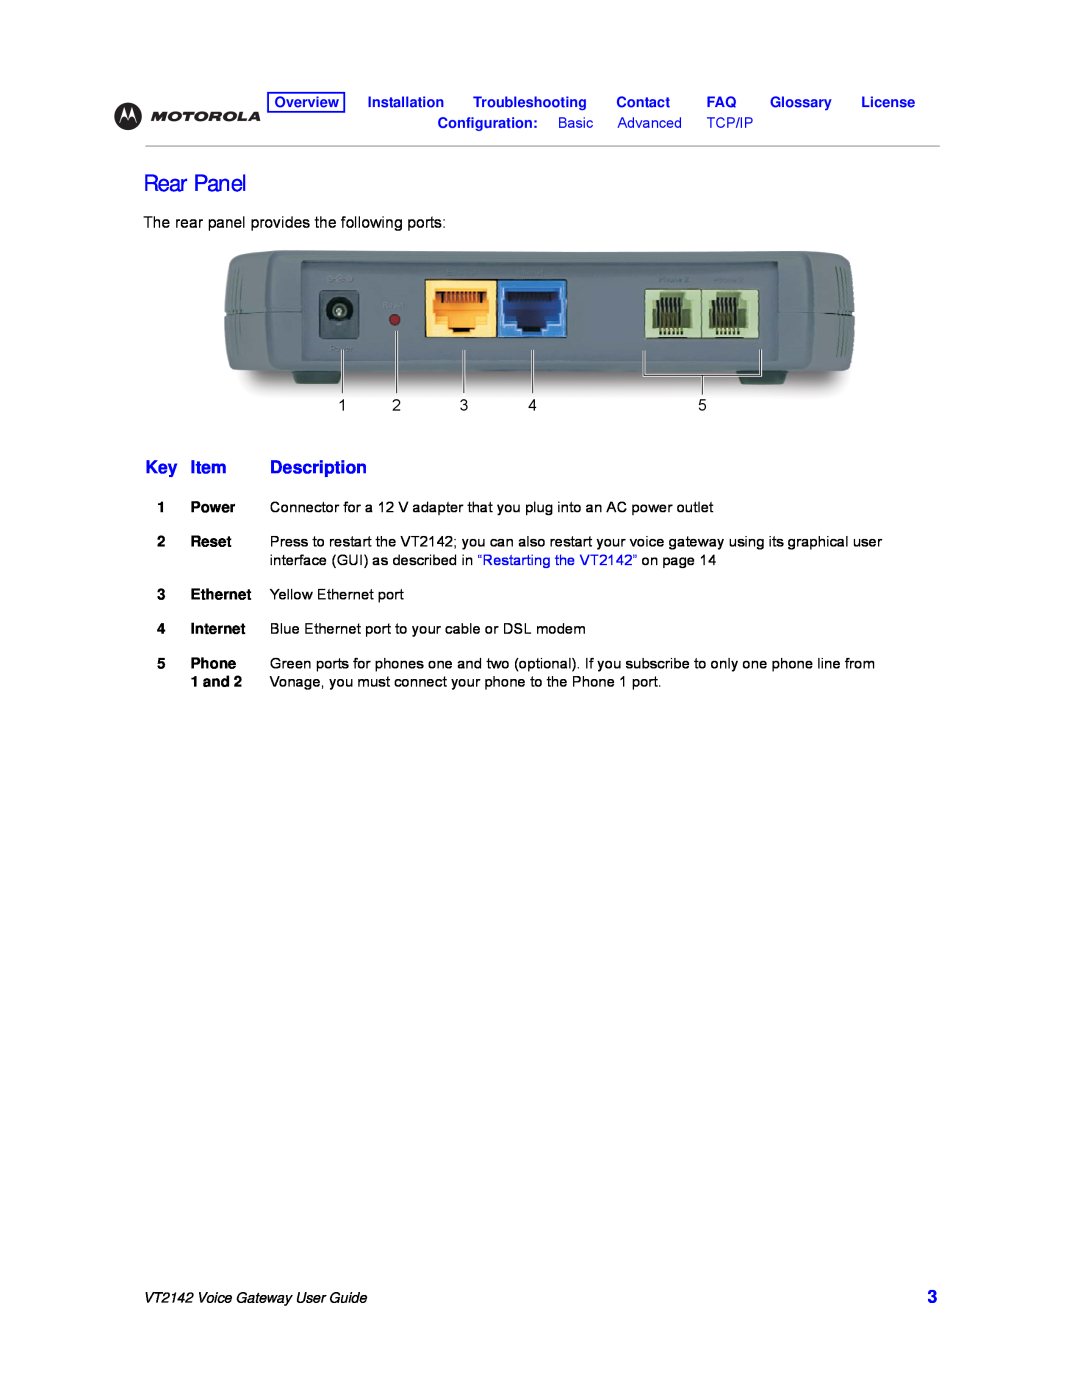 Motorola manual Rear Panel, Key Item, Description, Configuration Basic Advanced TCP/IP, VT2142 Voice Gateway User Guide 